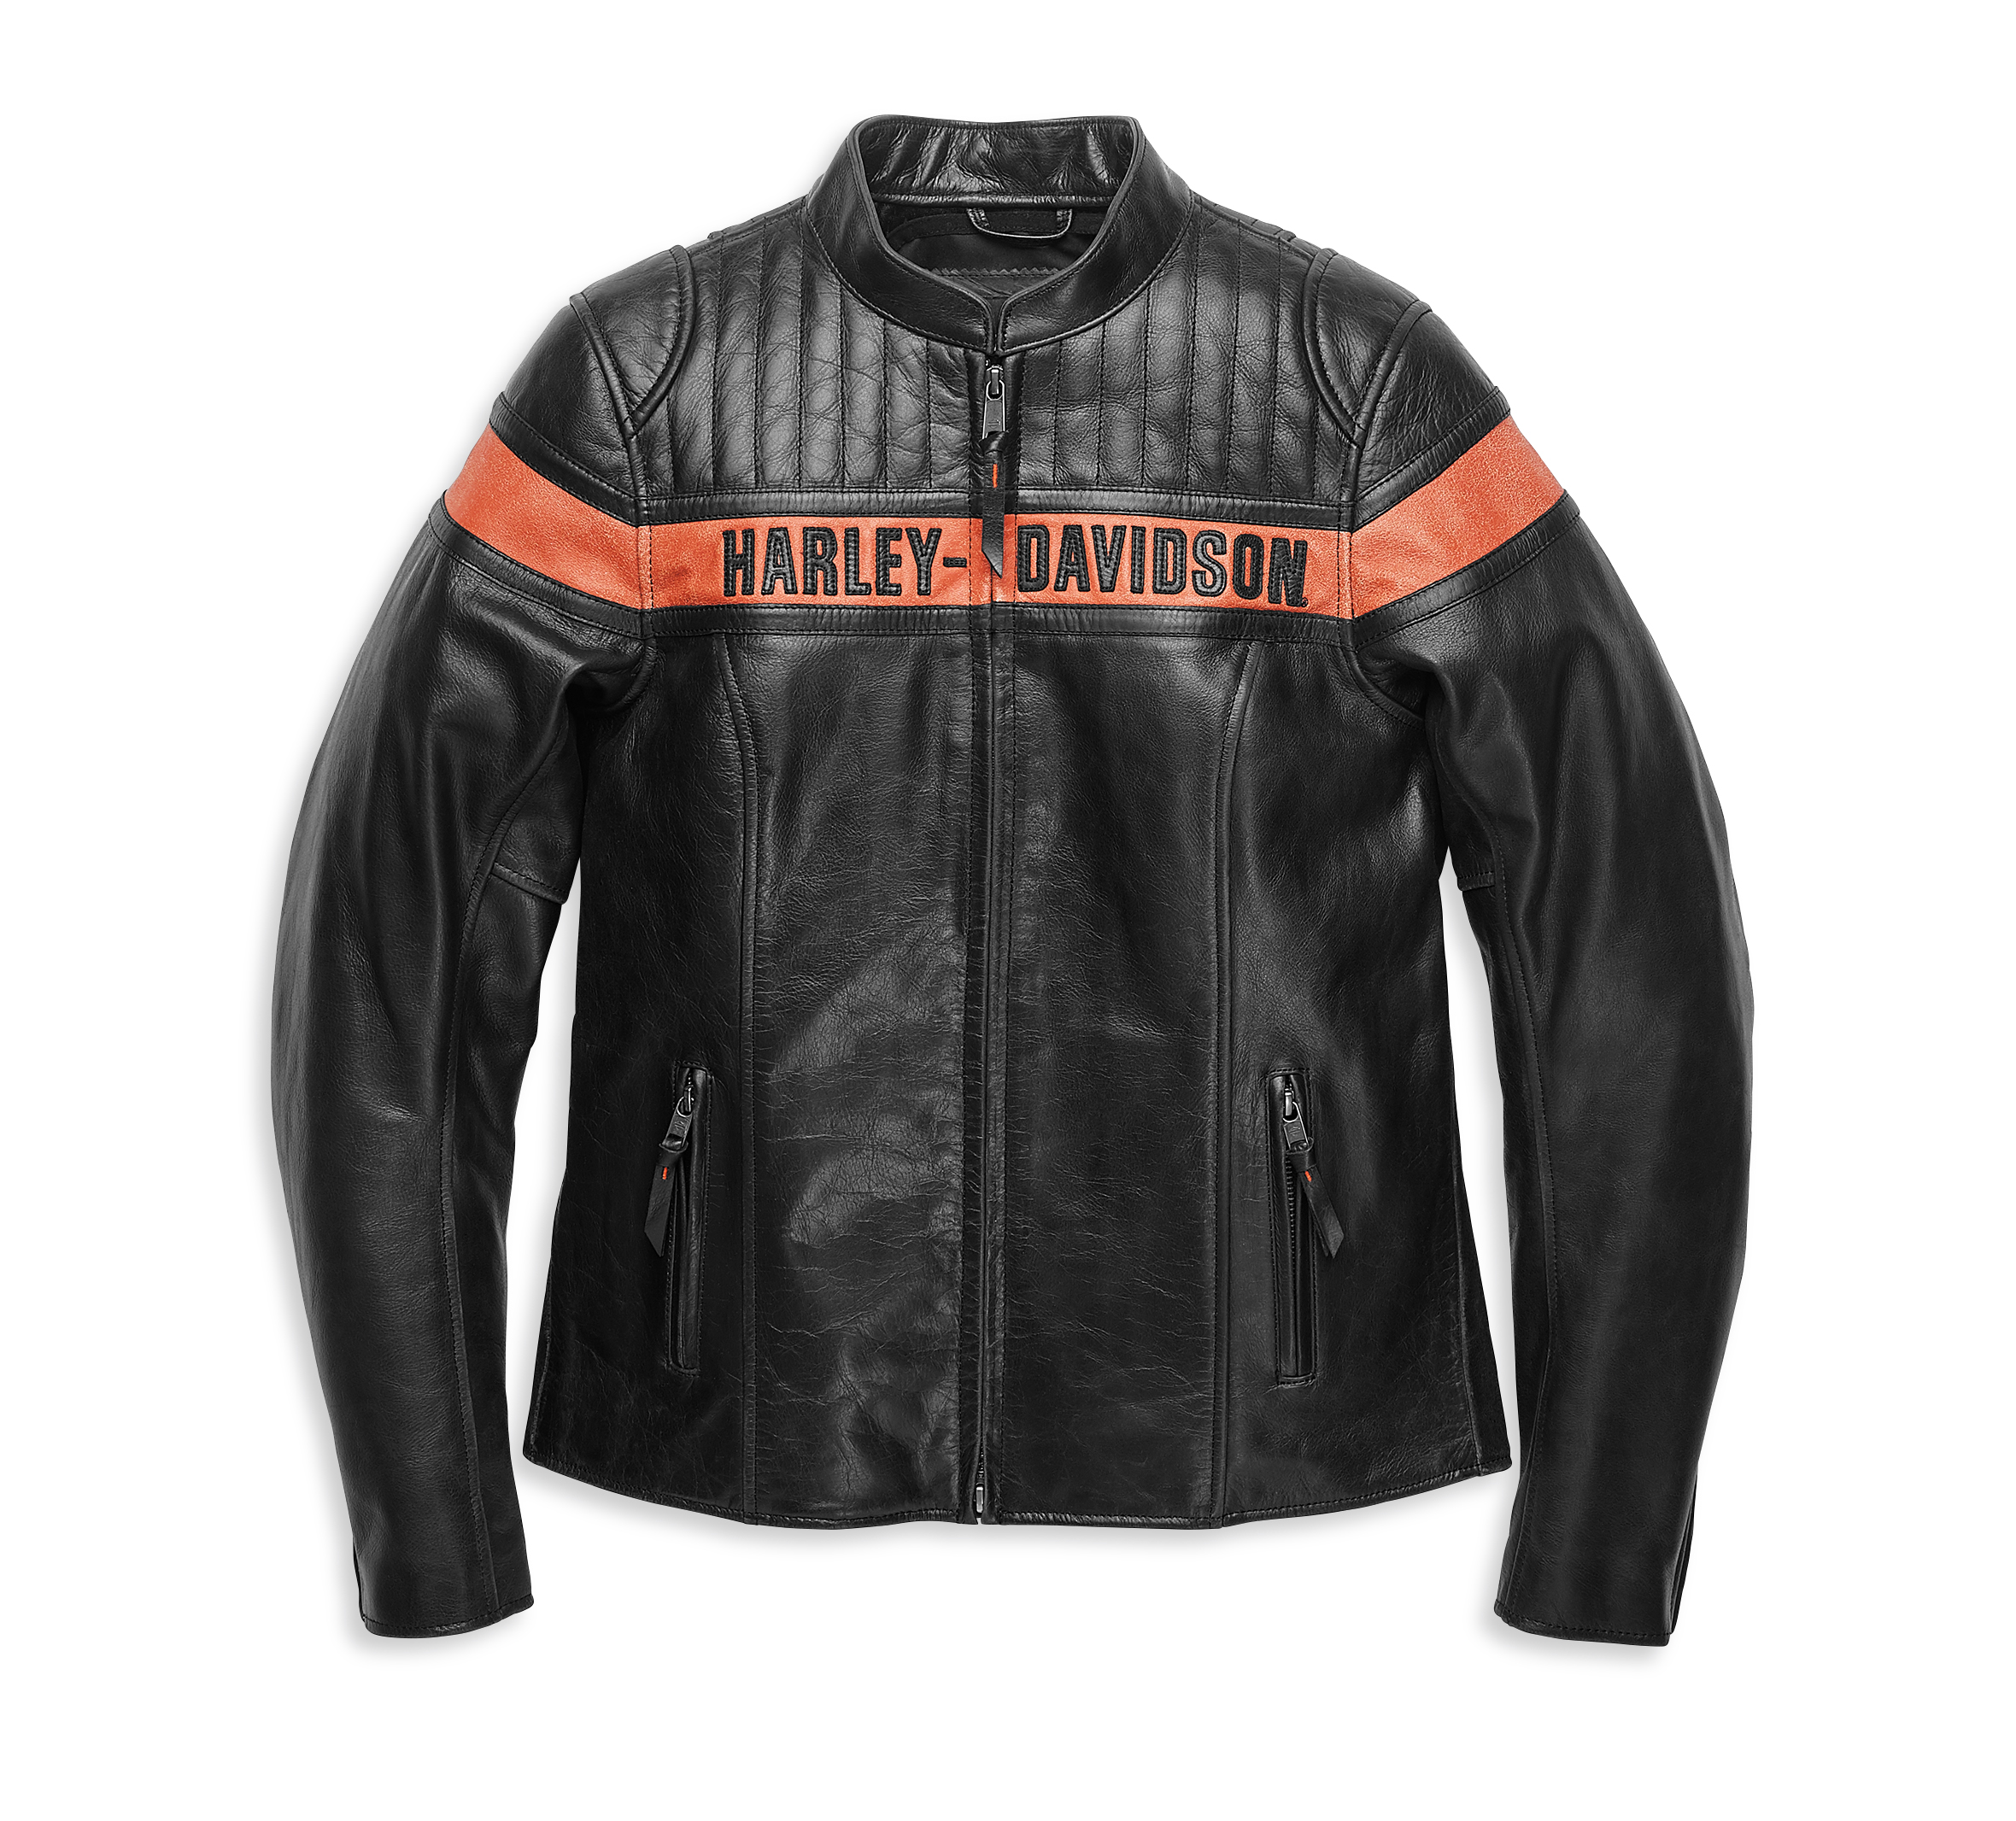 Harley Davidson womens leather jacket www.villeprudente.fr